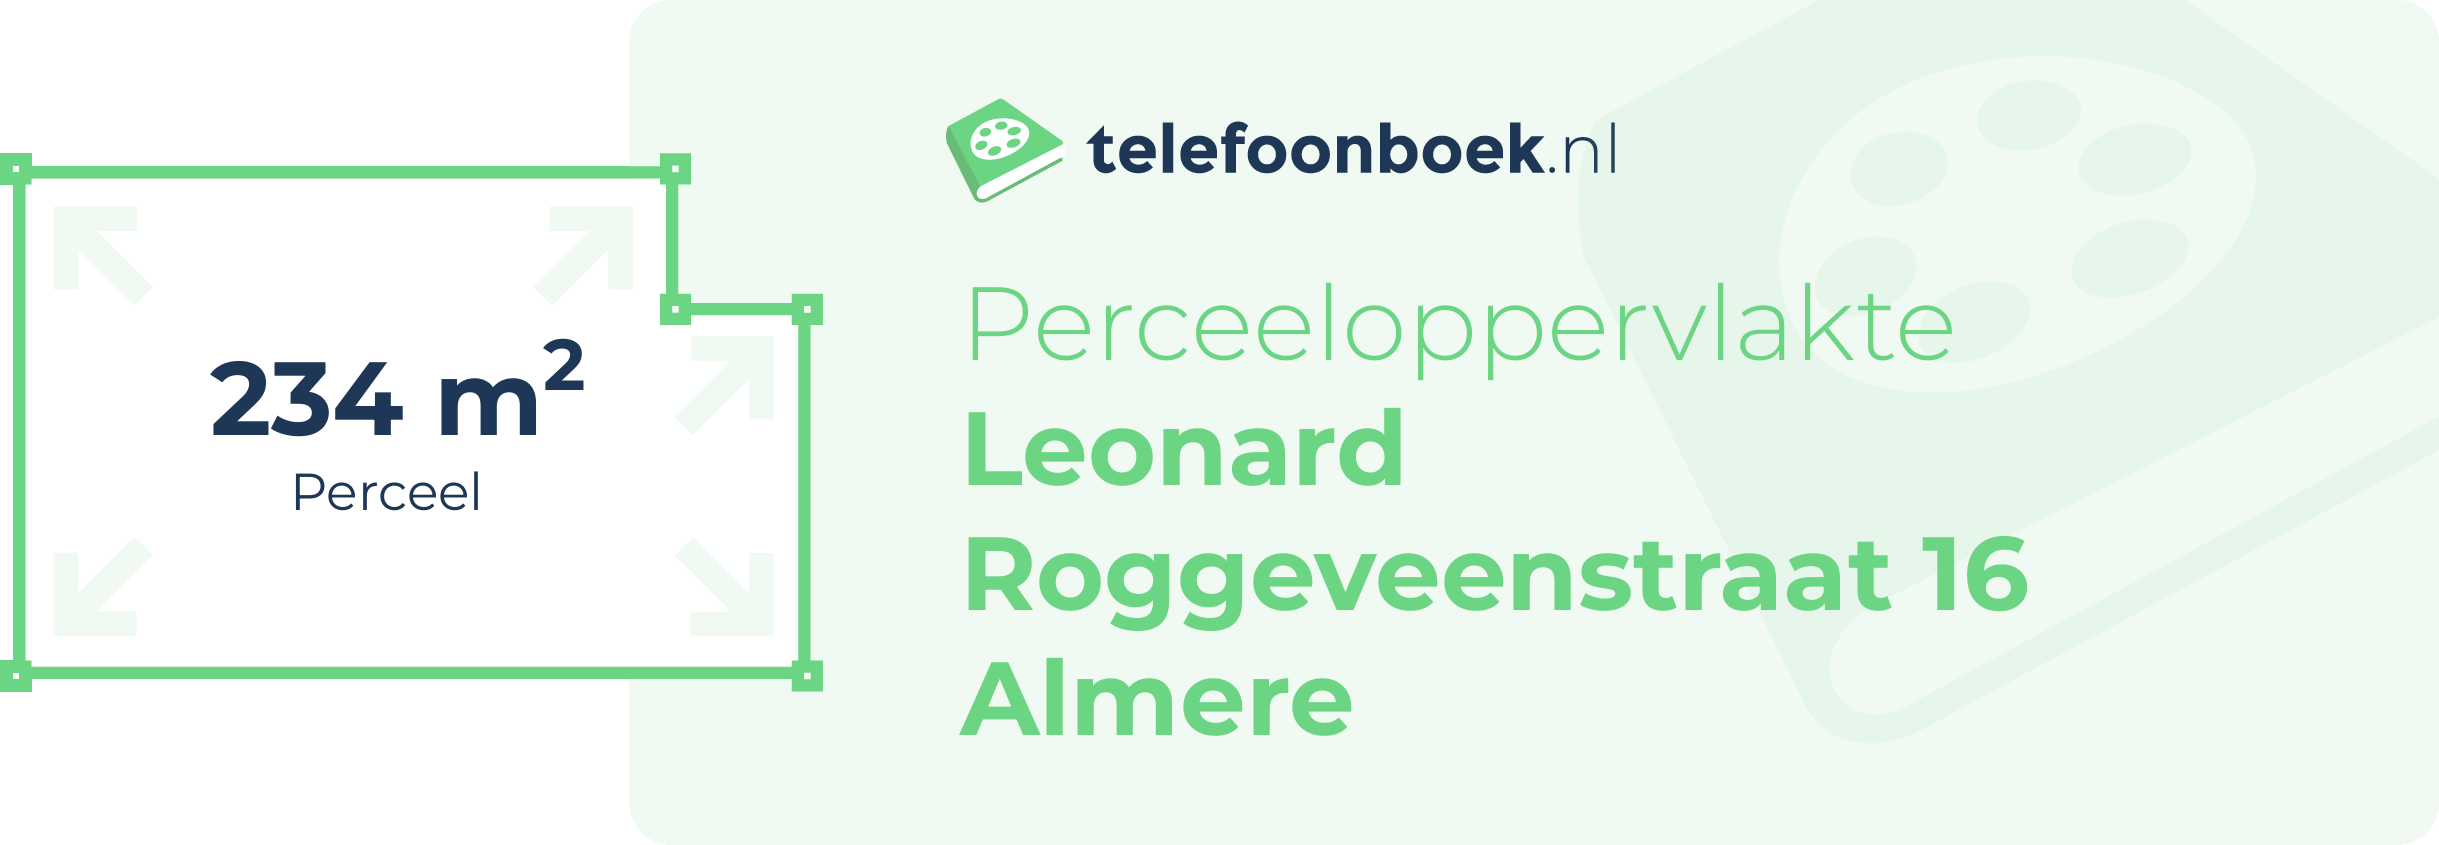 Perceeloppervlakte Leonard Roggeveenstraat 16 Almere